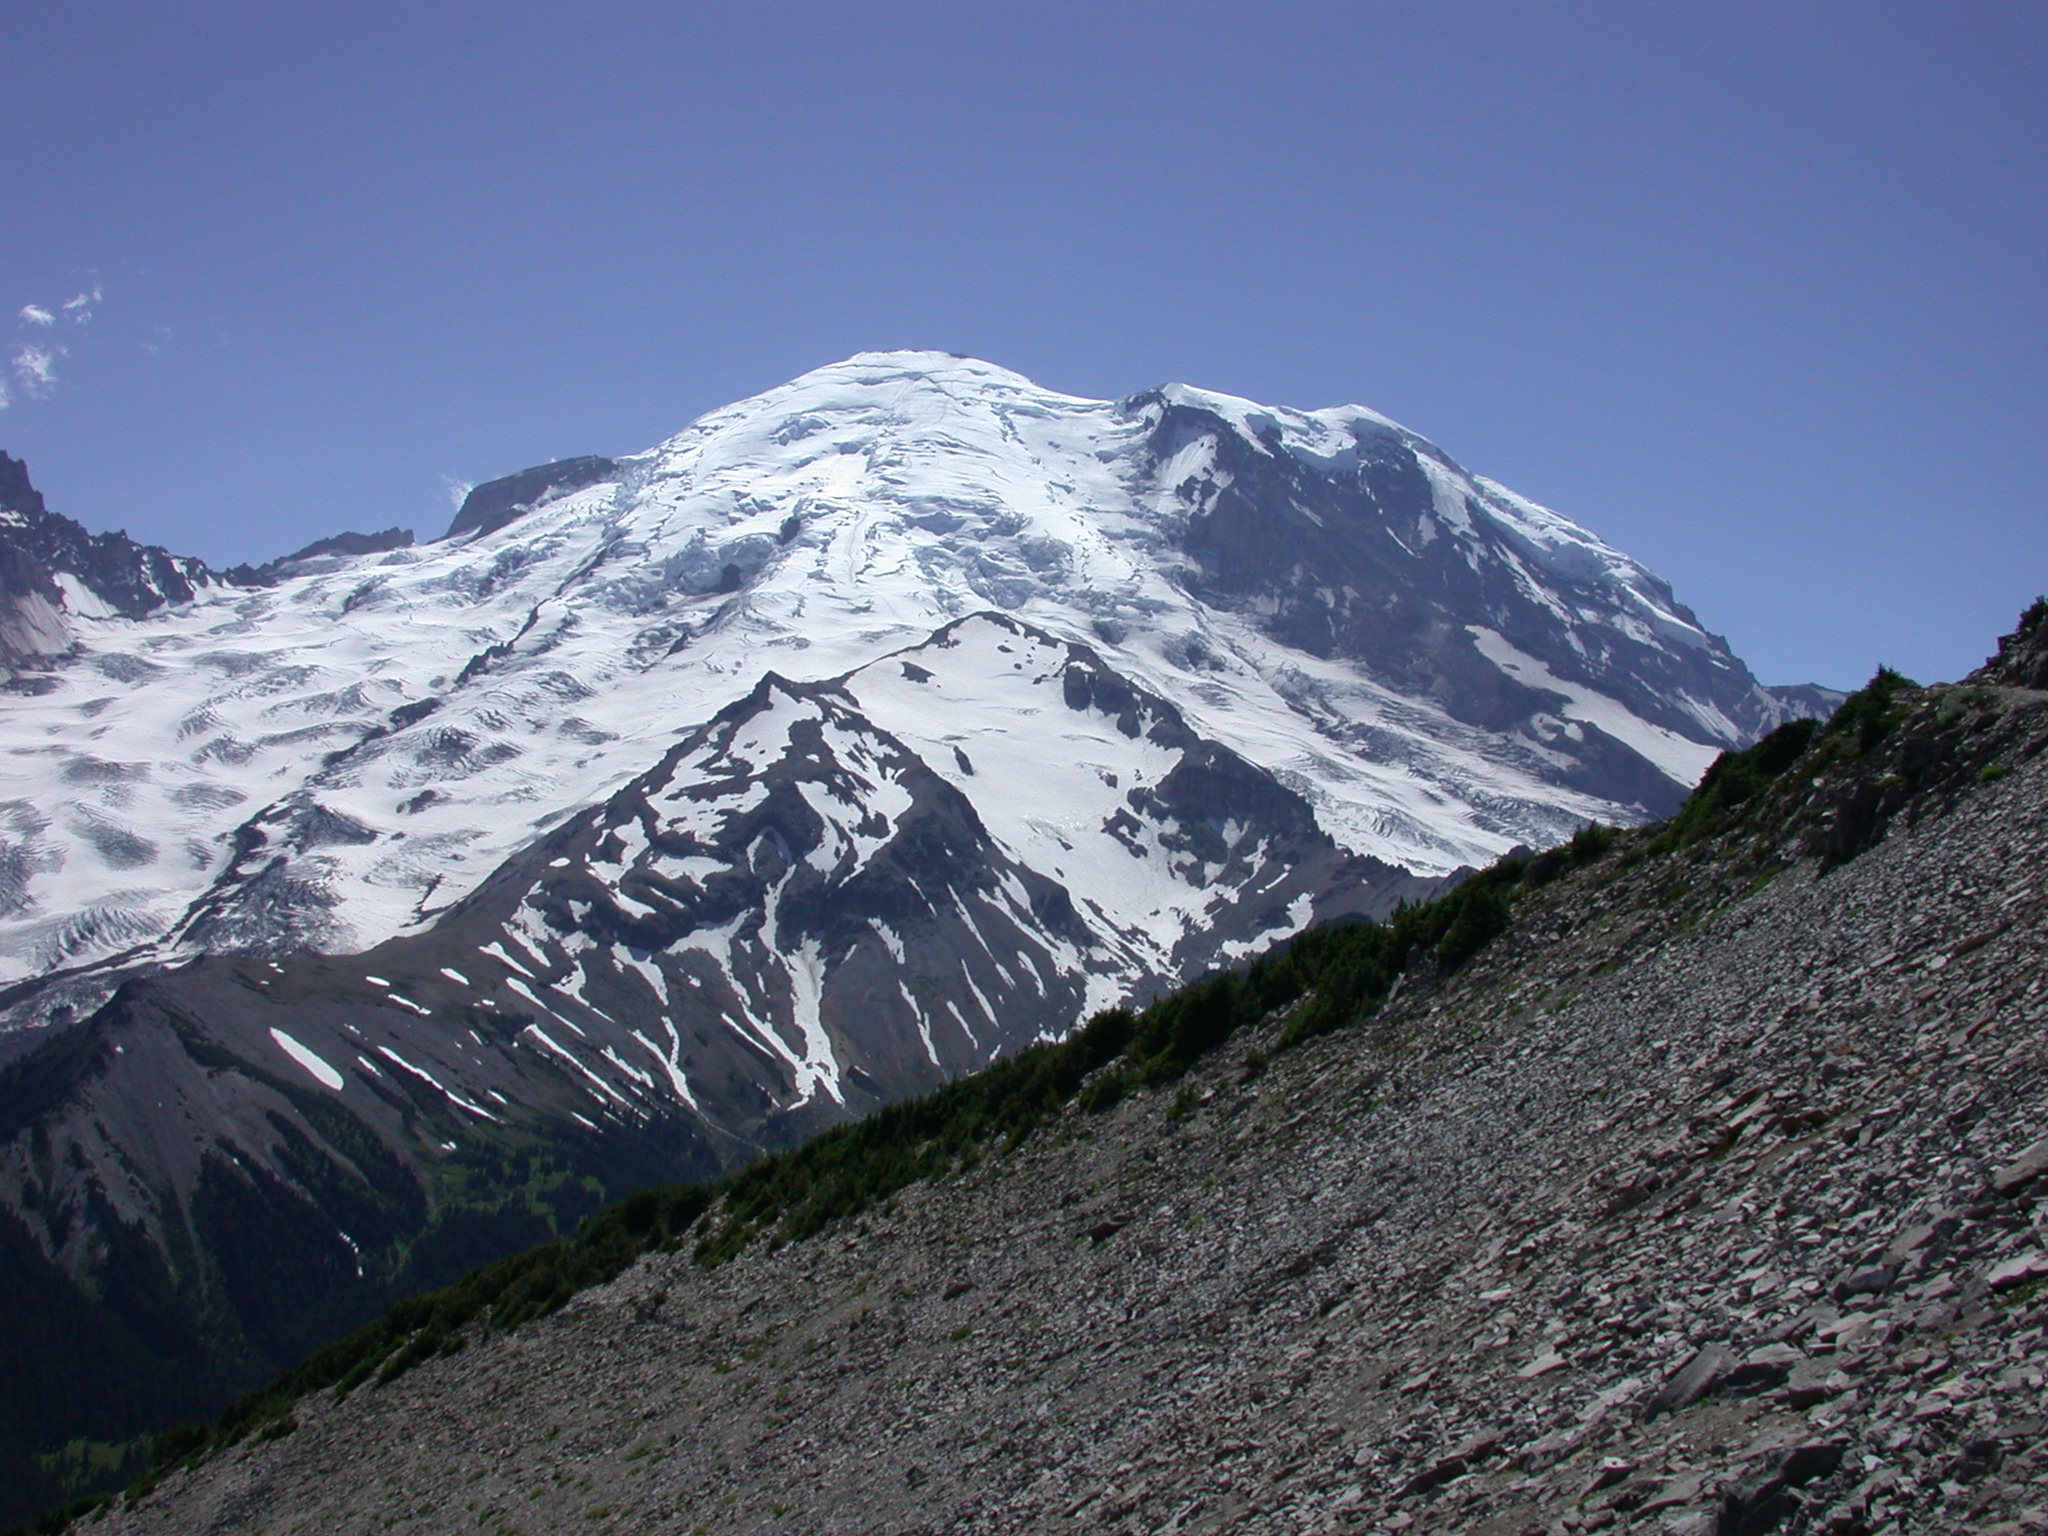 Rock Slide on Lower Trail to Burroughs Peaks on Mount Rainier